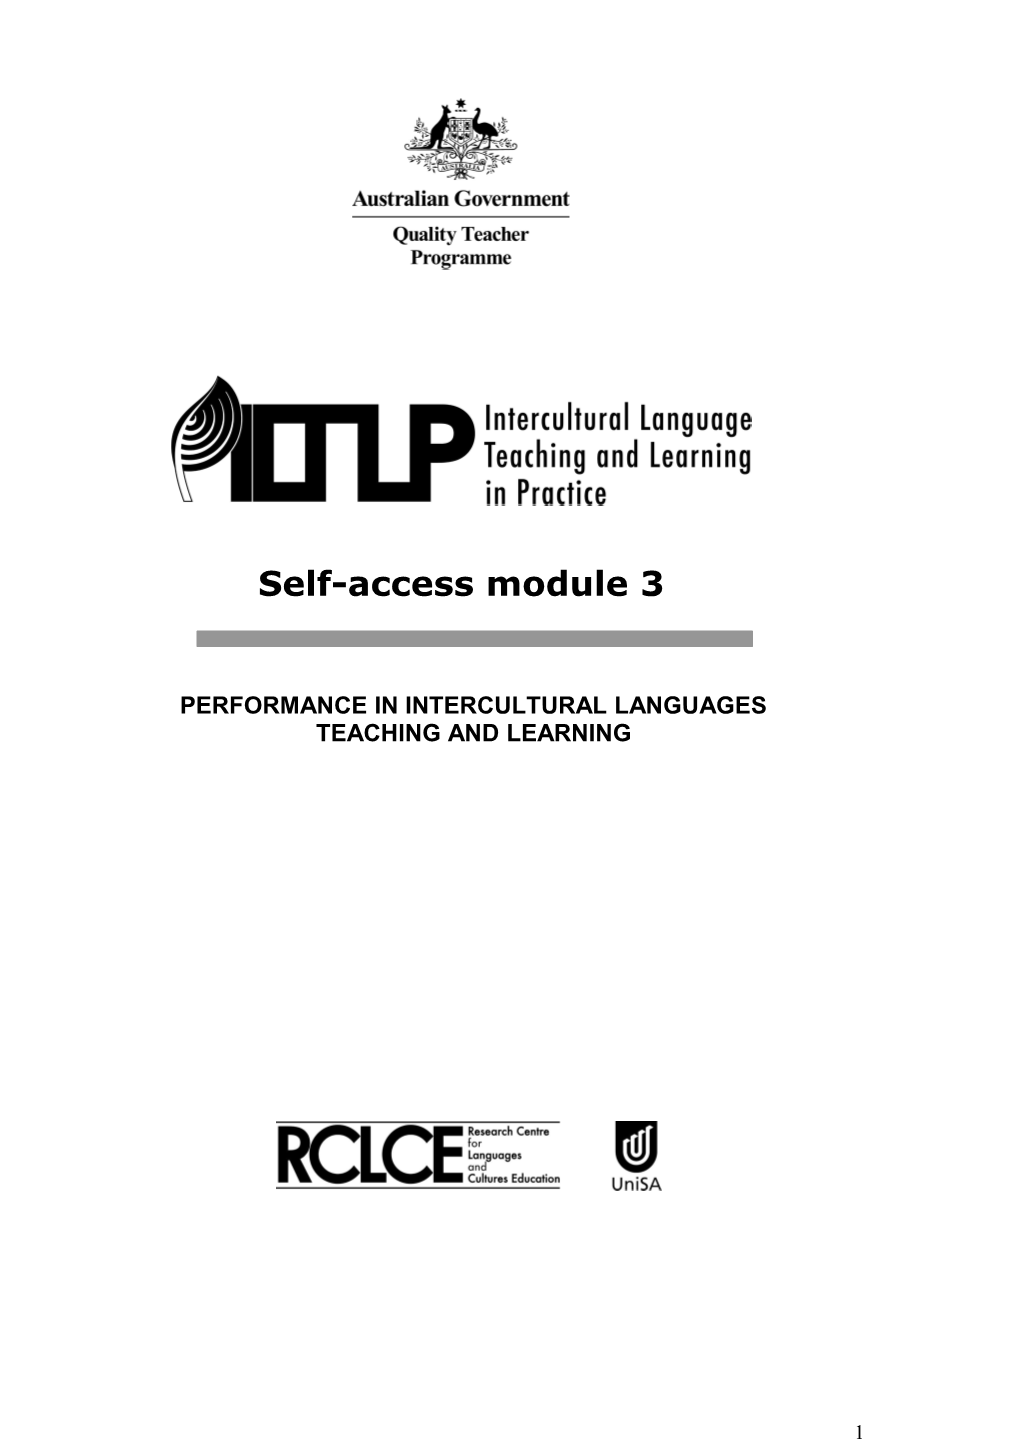 ILTLP Self-Access Learning Modules: Pedagogies of Intercultural Languages Learning